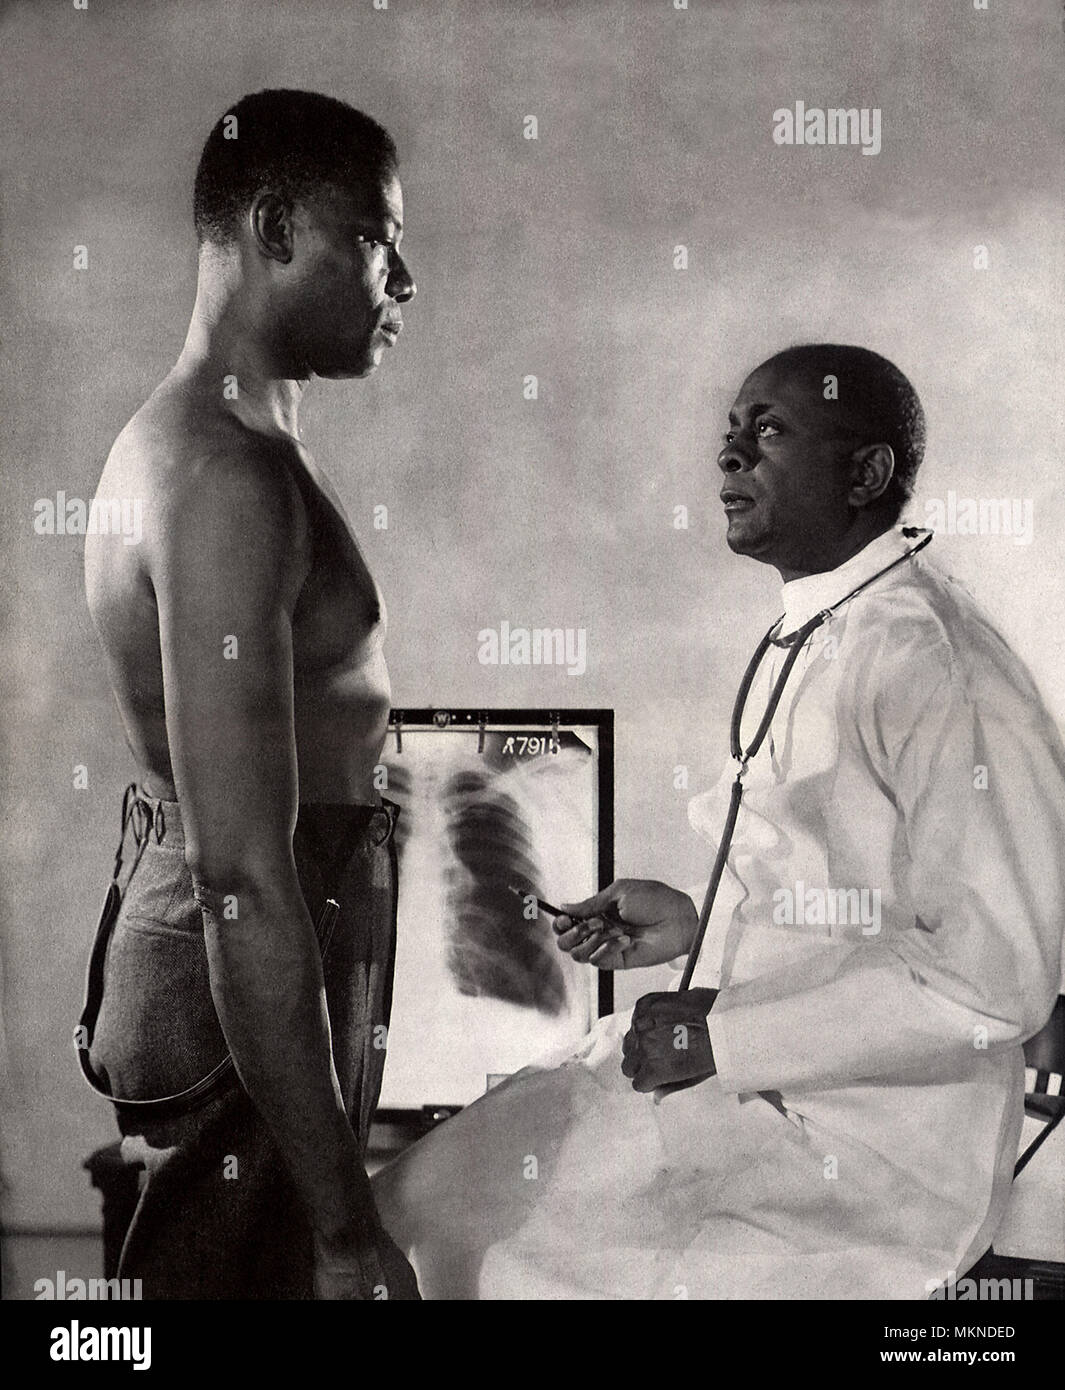 Doctor Examines Patient Stock Photo